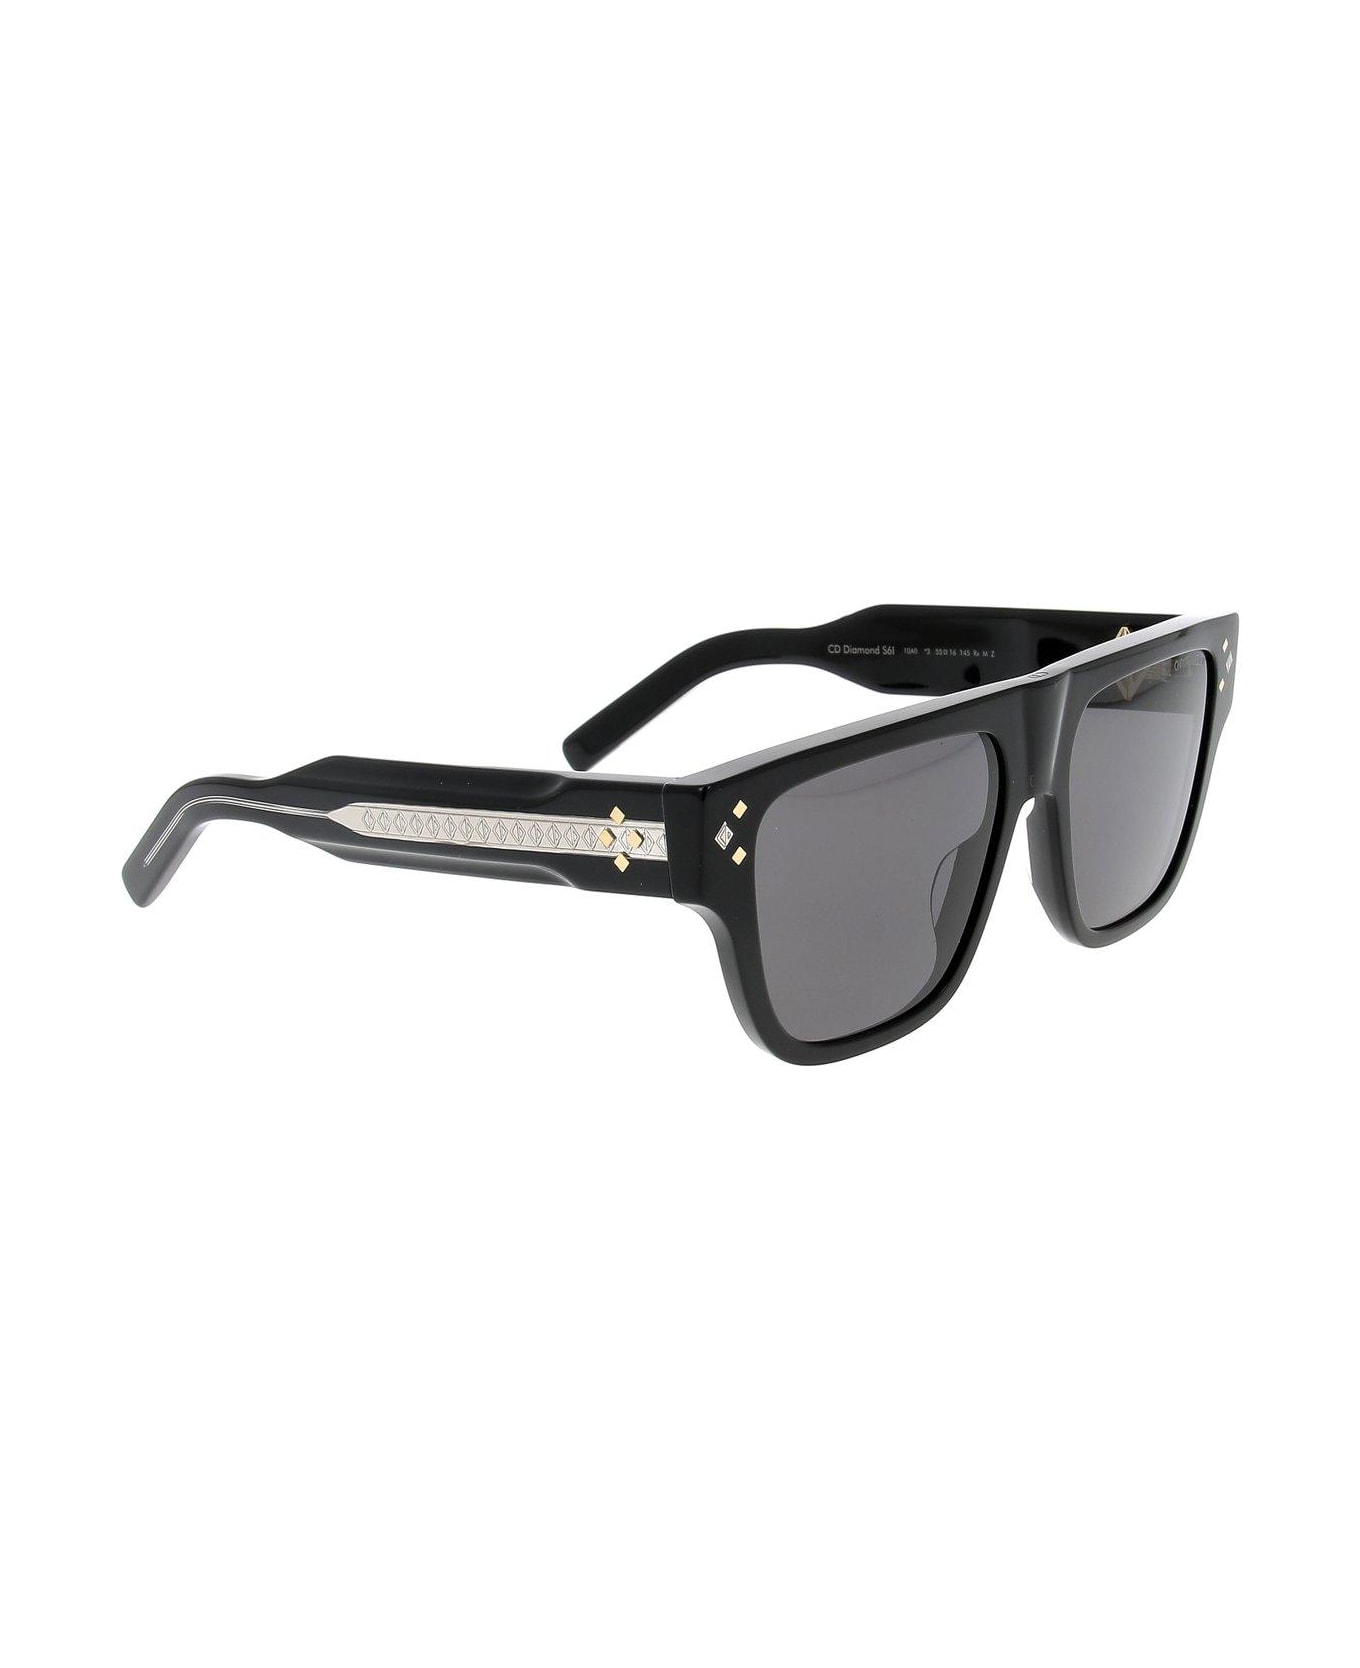 Dior Eyewear Square Frame Sunglasses - 10a0